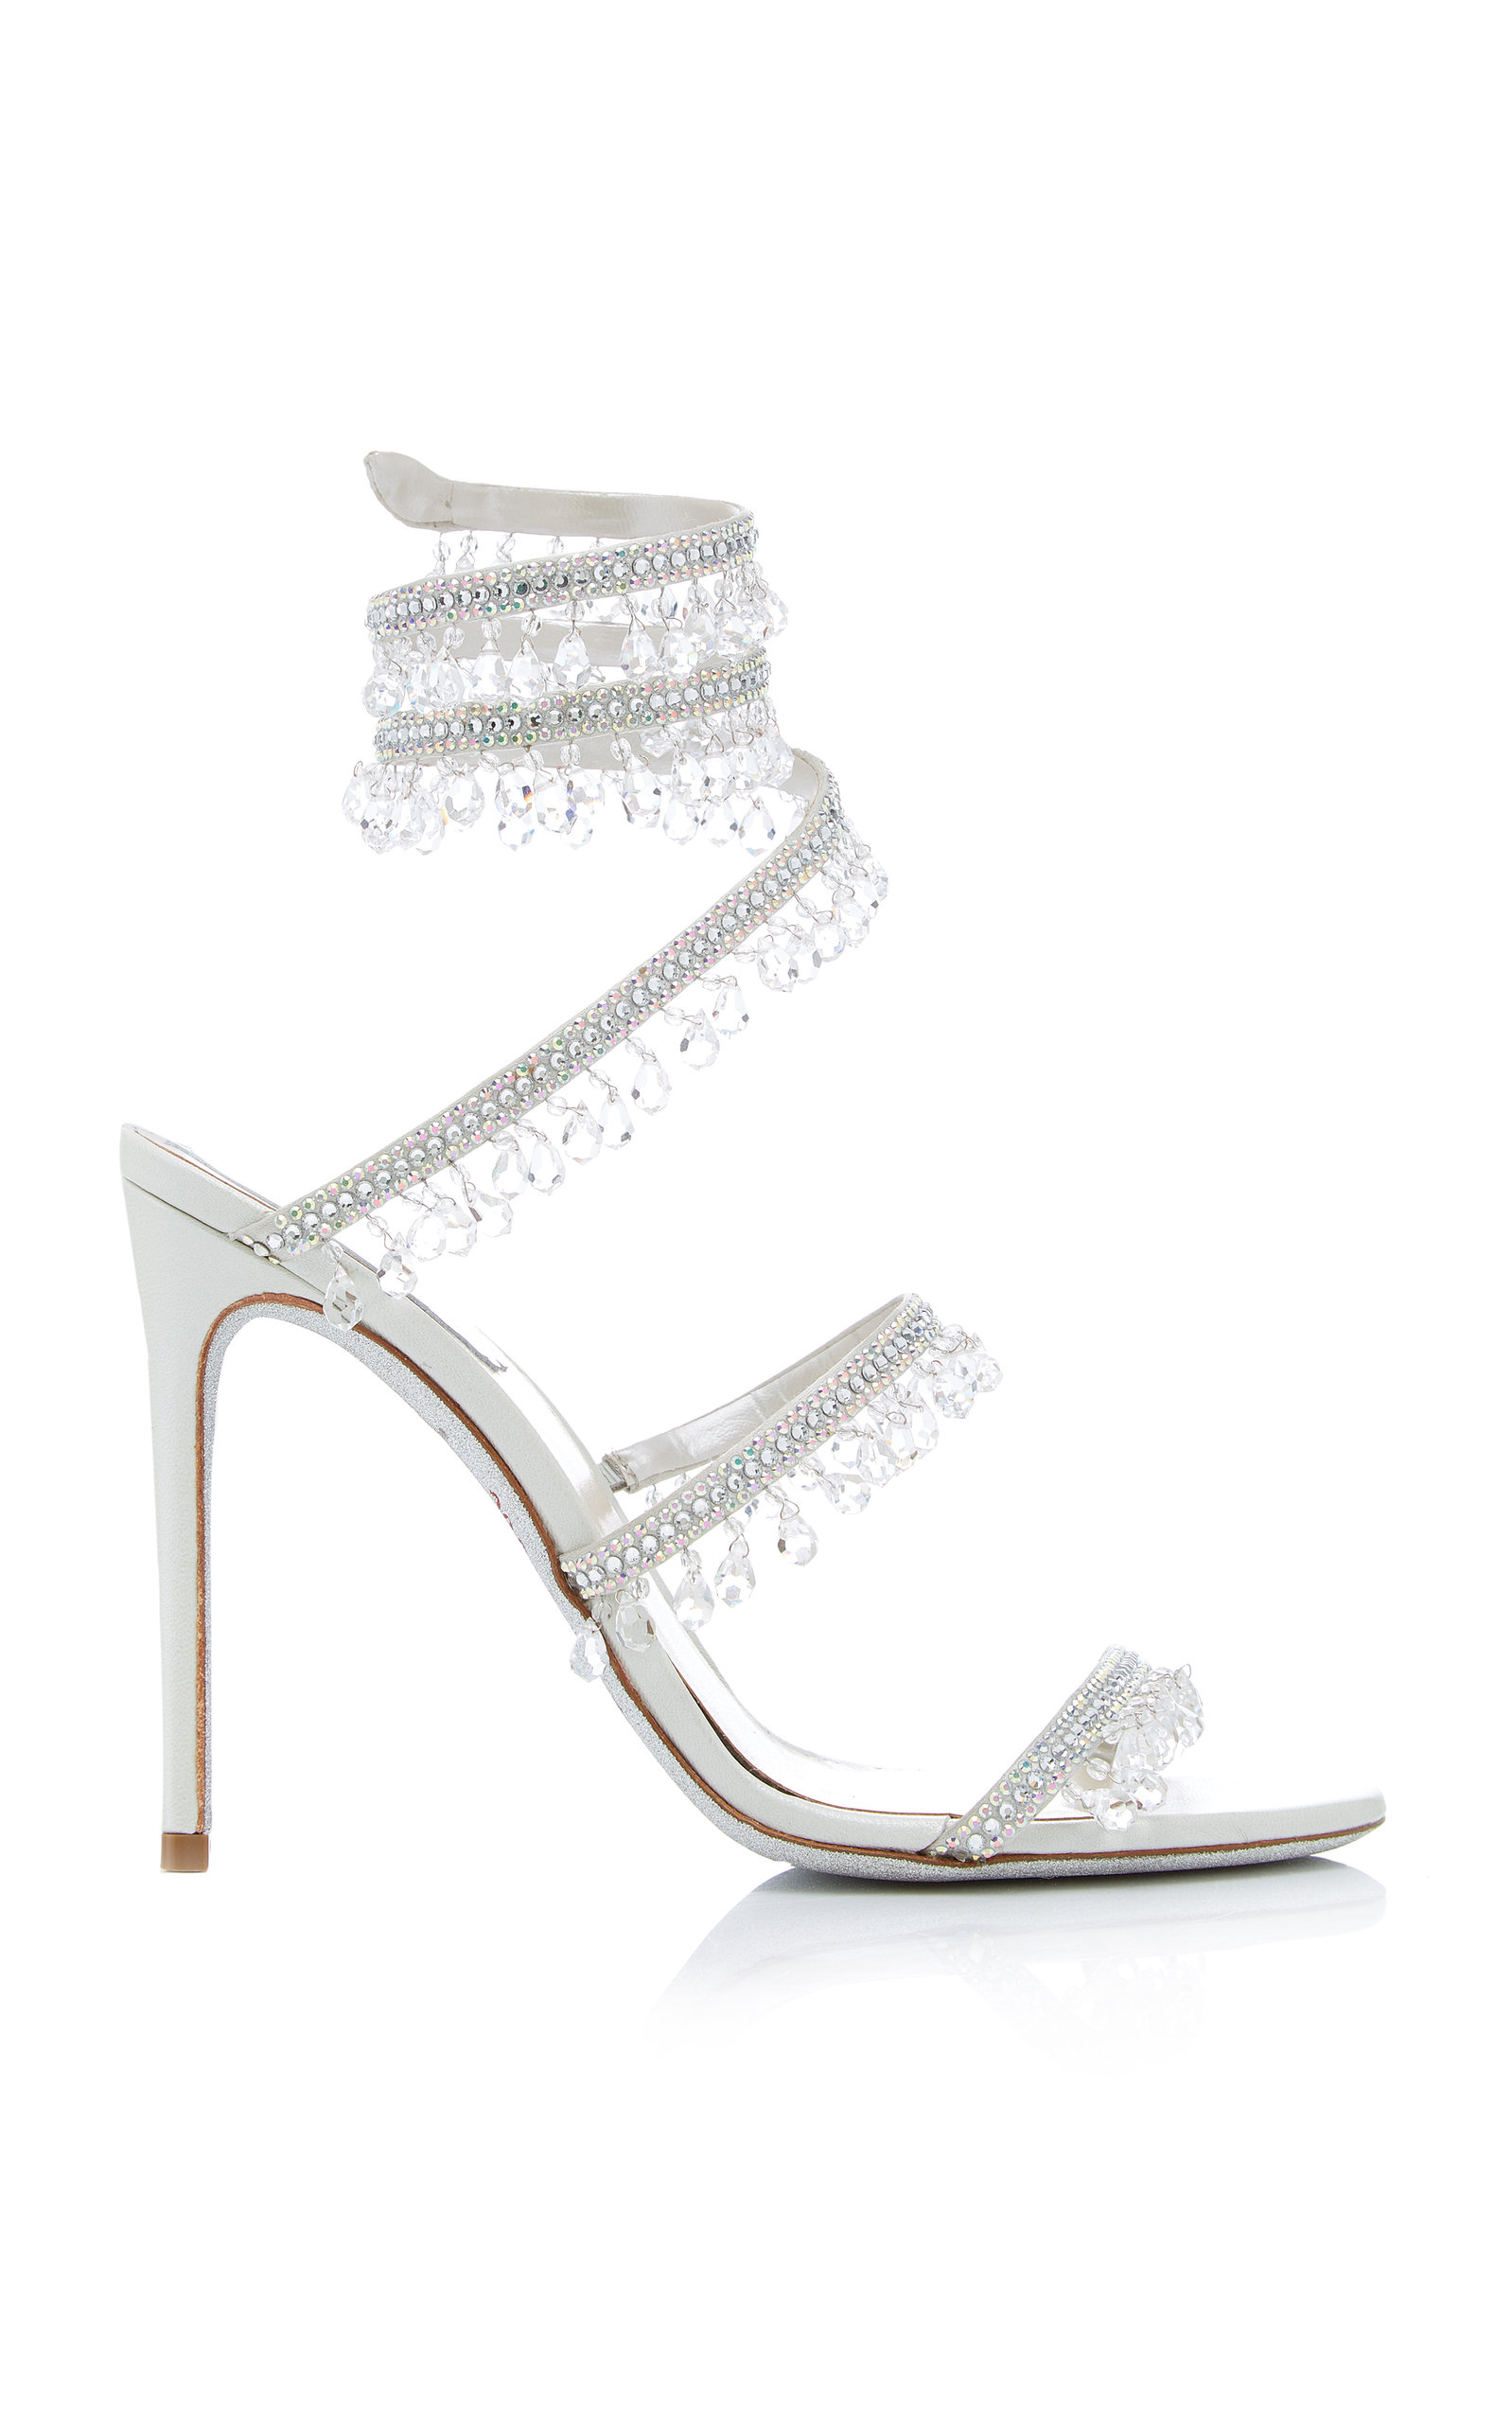 Exclusive Crystal-Embellished Sandal by 